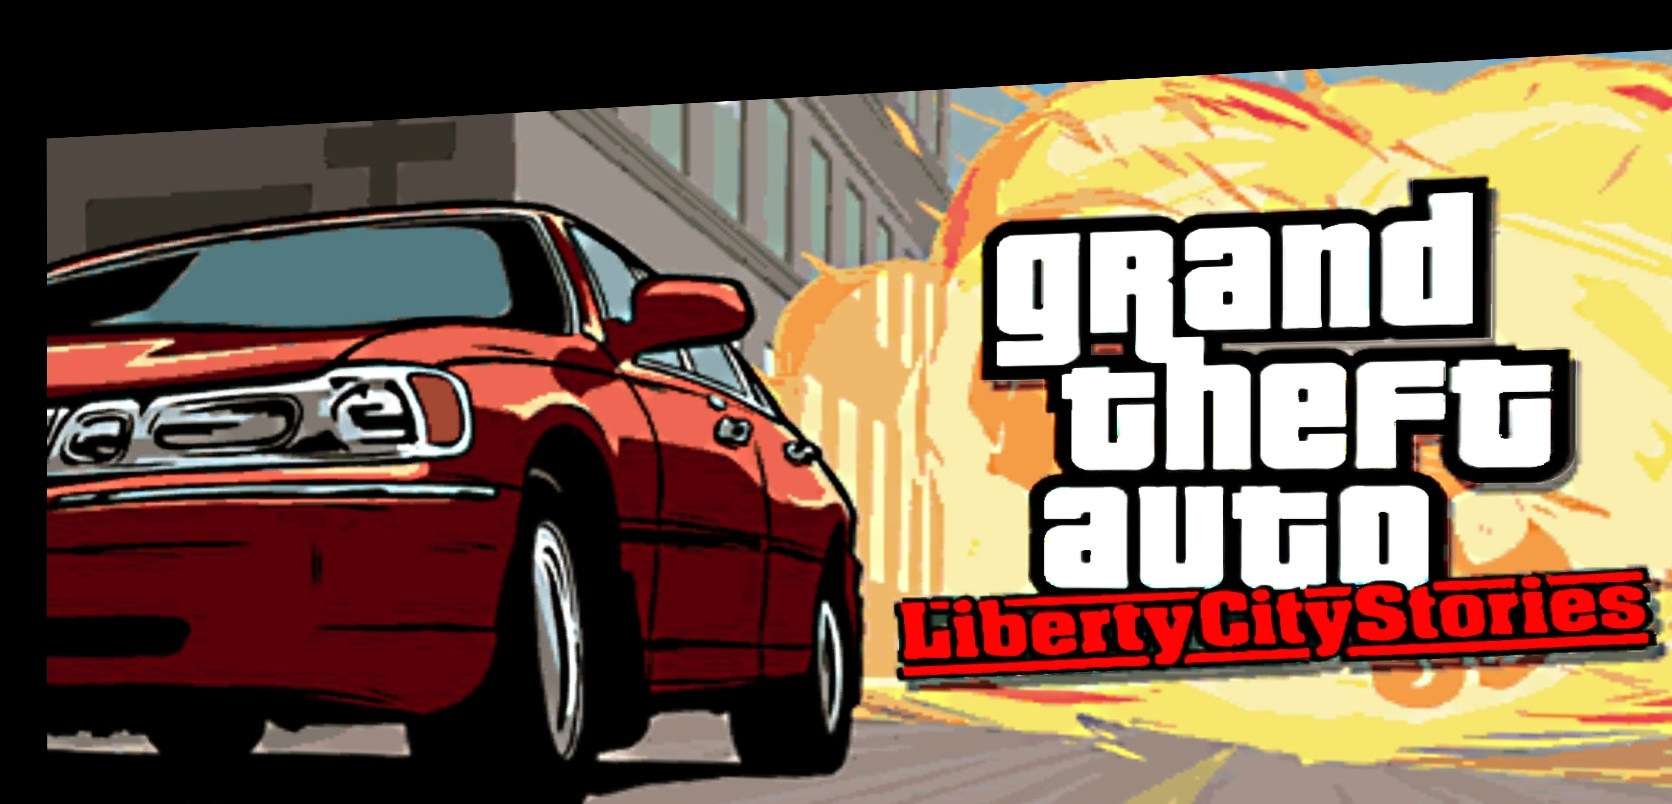 Grand Theft Auto: Liberty City Stories na PC. Fan odtworzył misje z PSP i PS2